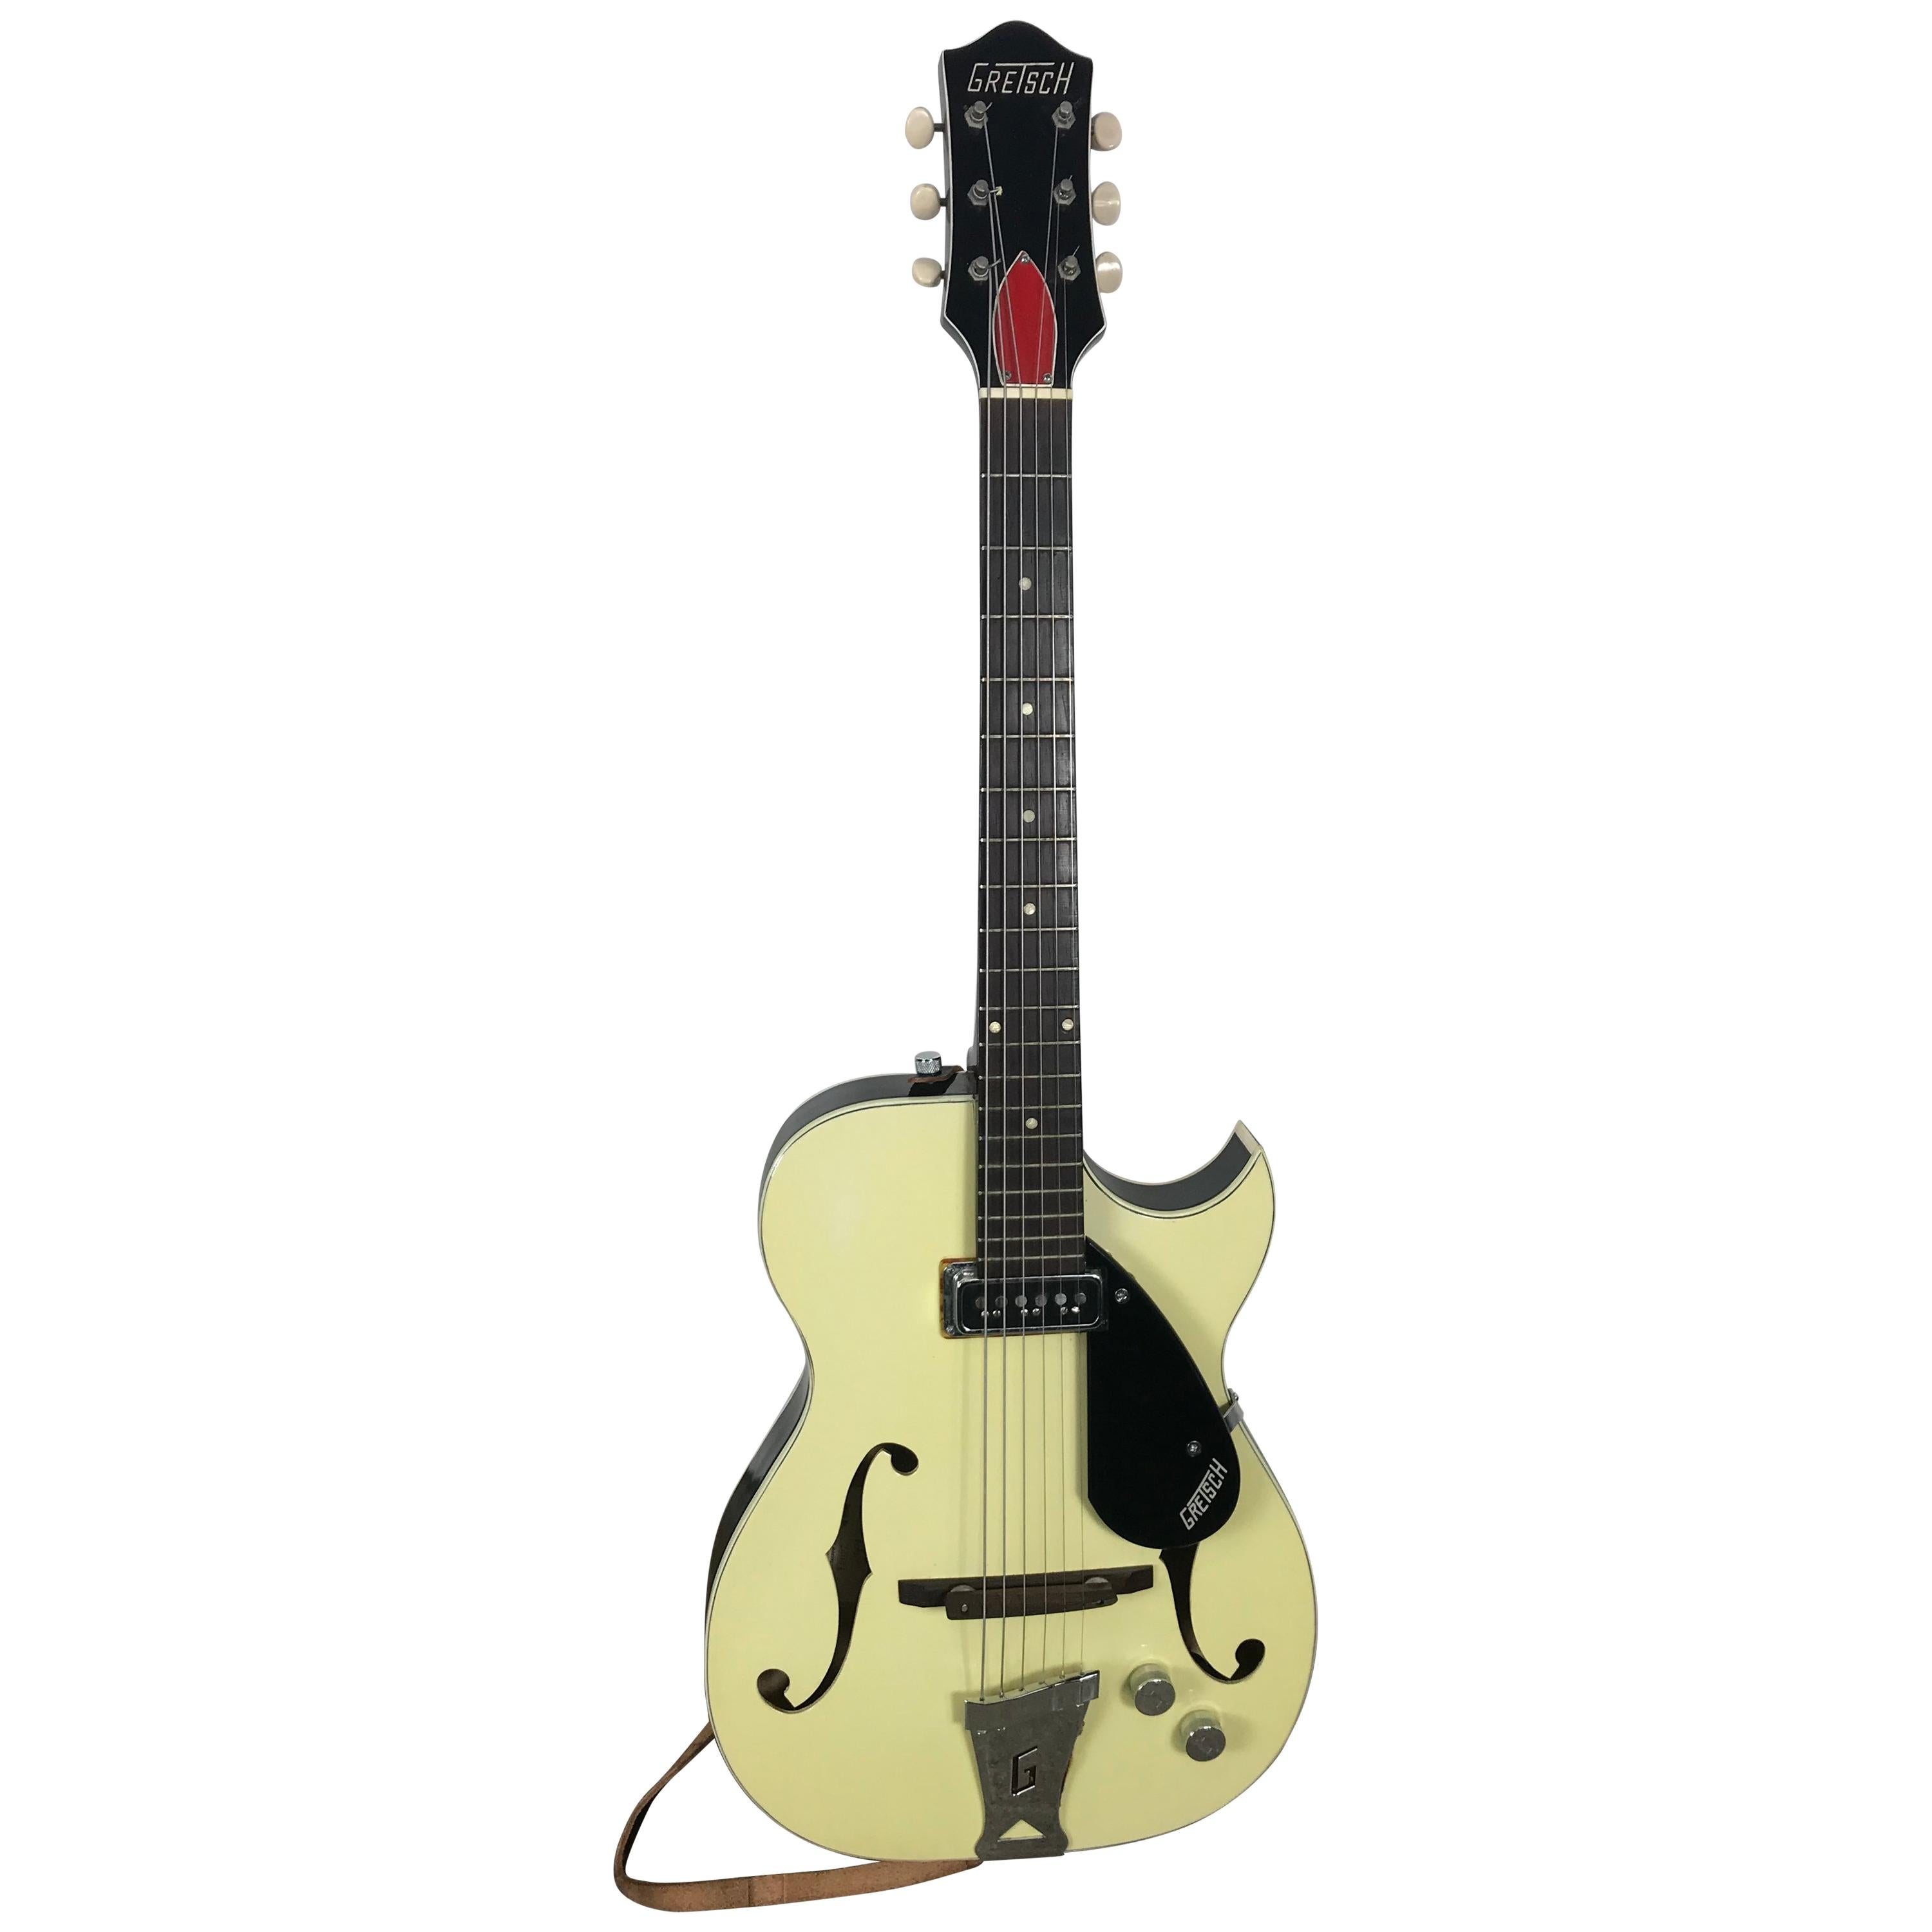 Vintage 1957 Gretsch Rambler 6115 Hollow Body Electric Guitar with Original Case